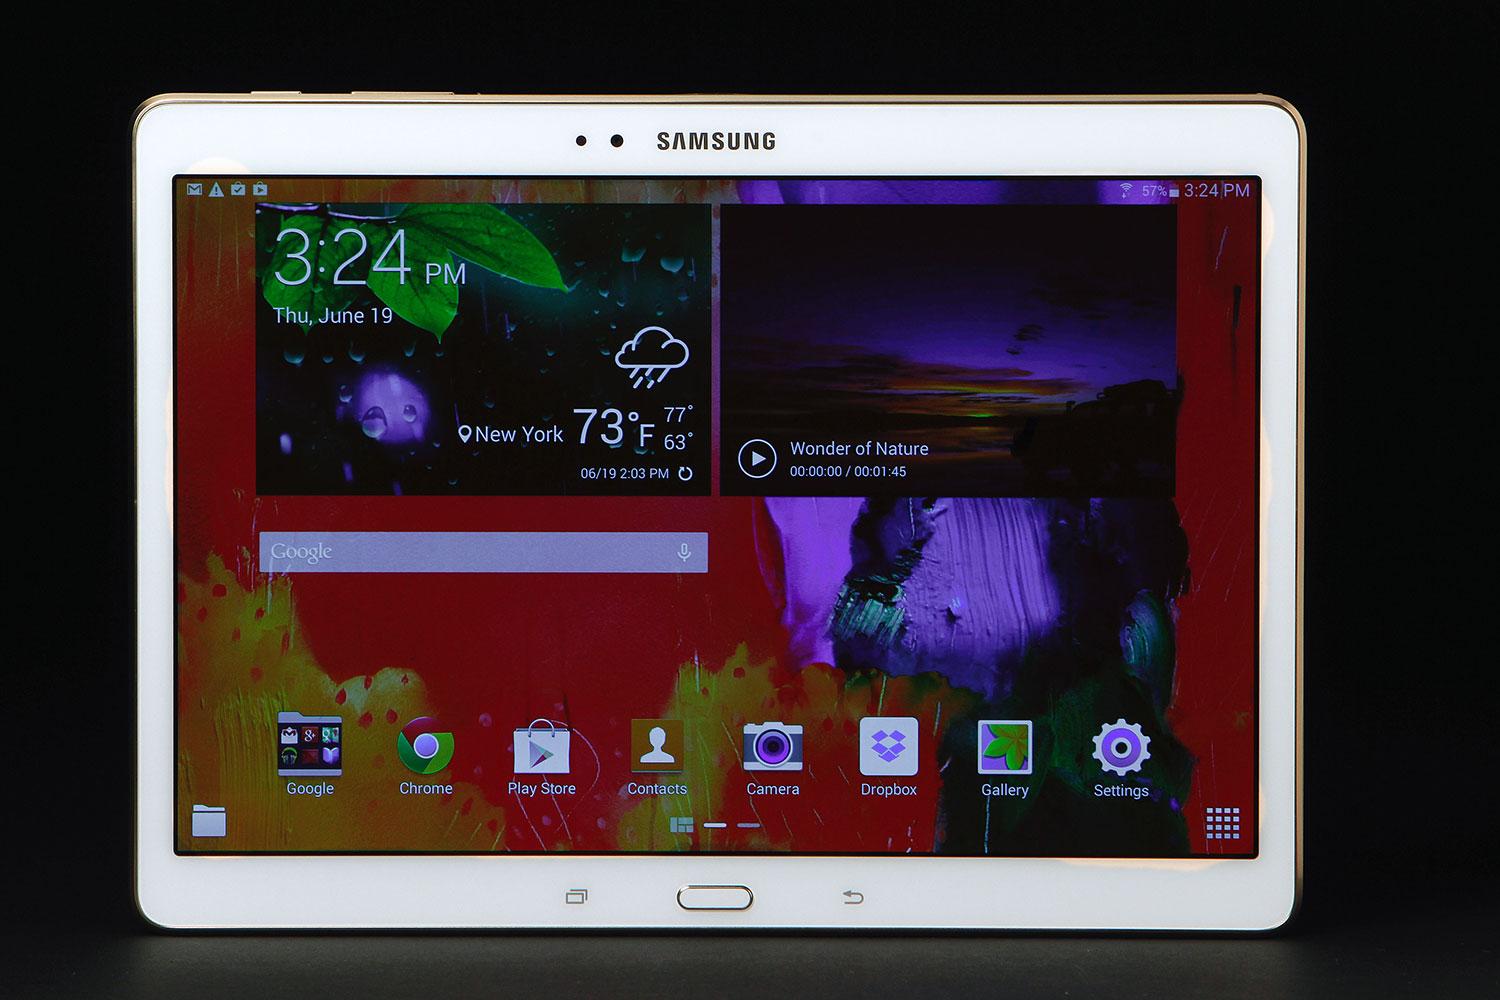 Samsung Galaxy Tab S 10.5 specs - PhoneArena